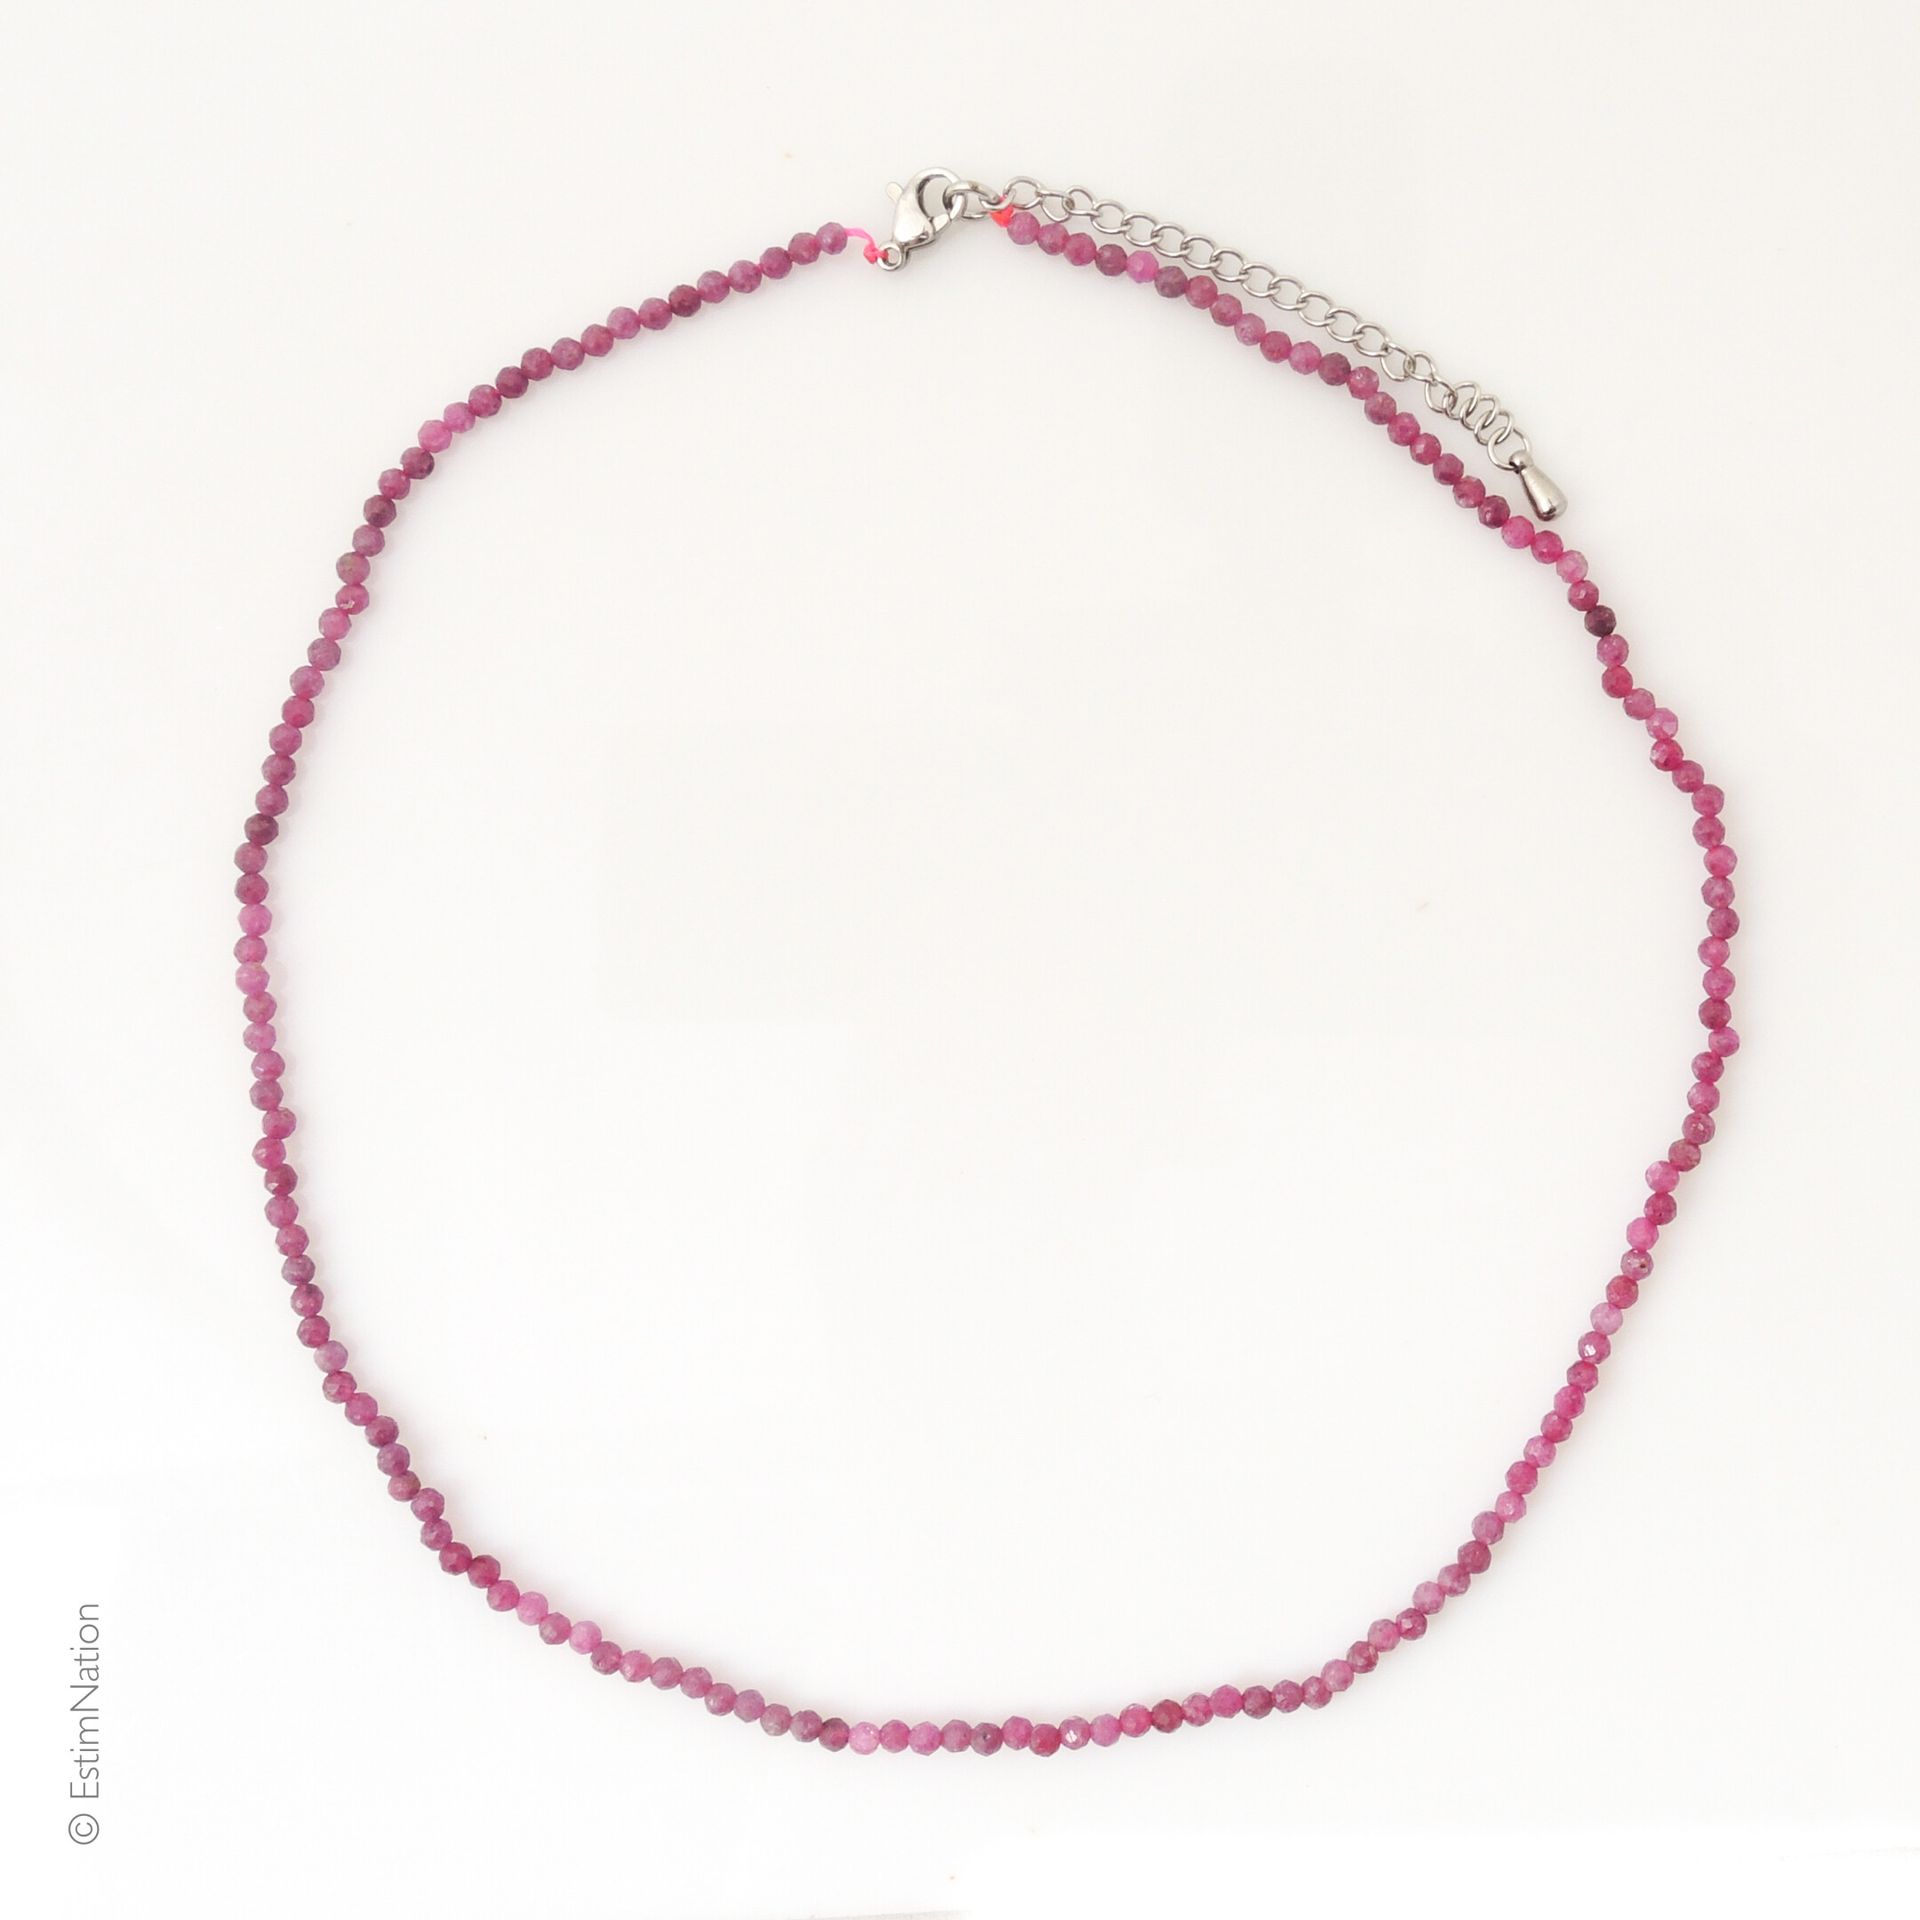 COLLIER RUBIS Fin collier de perles de racines de rubis. Fermoir mousqueton en m&hellip;